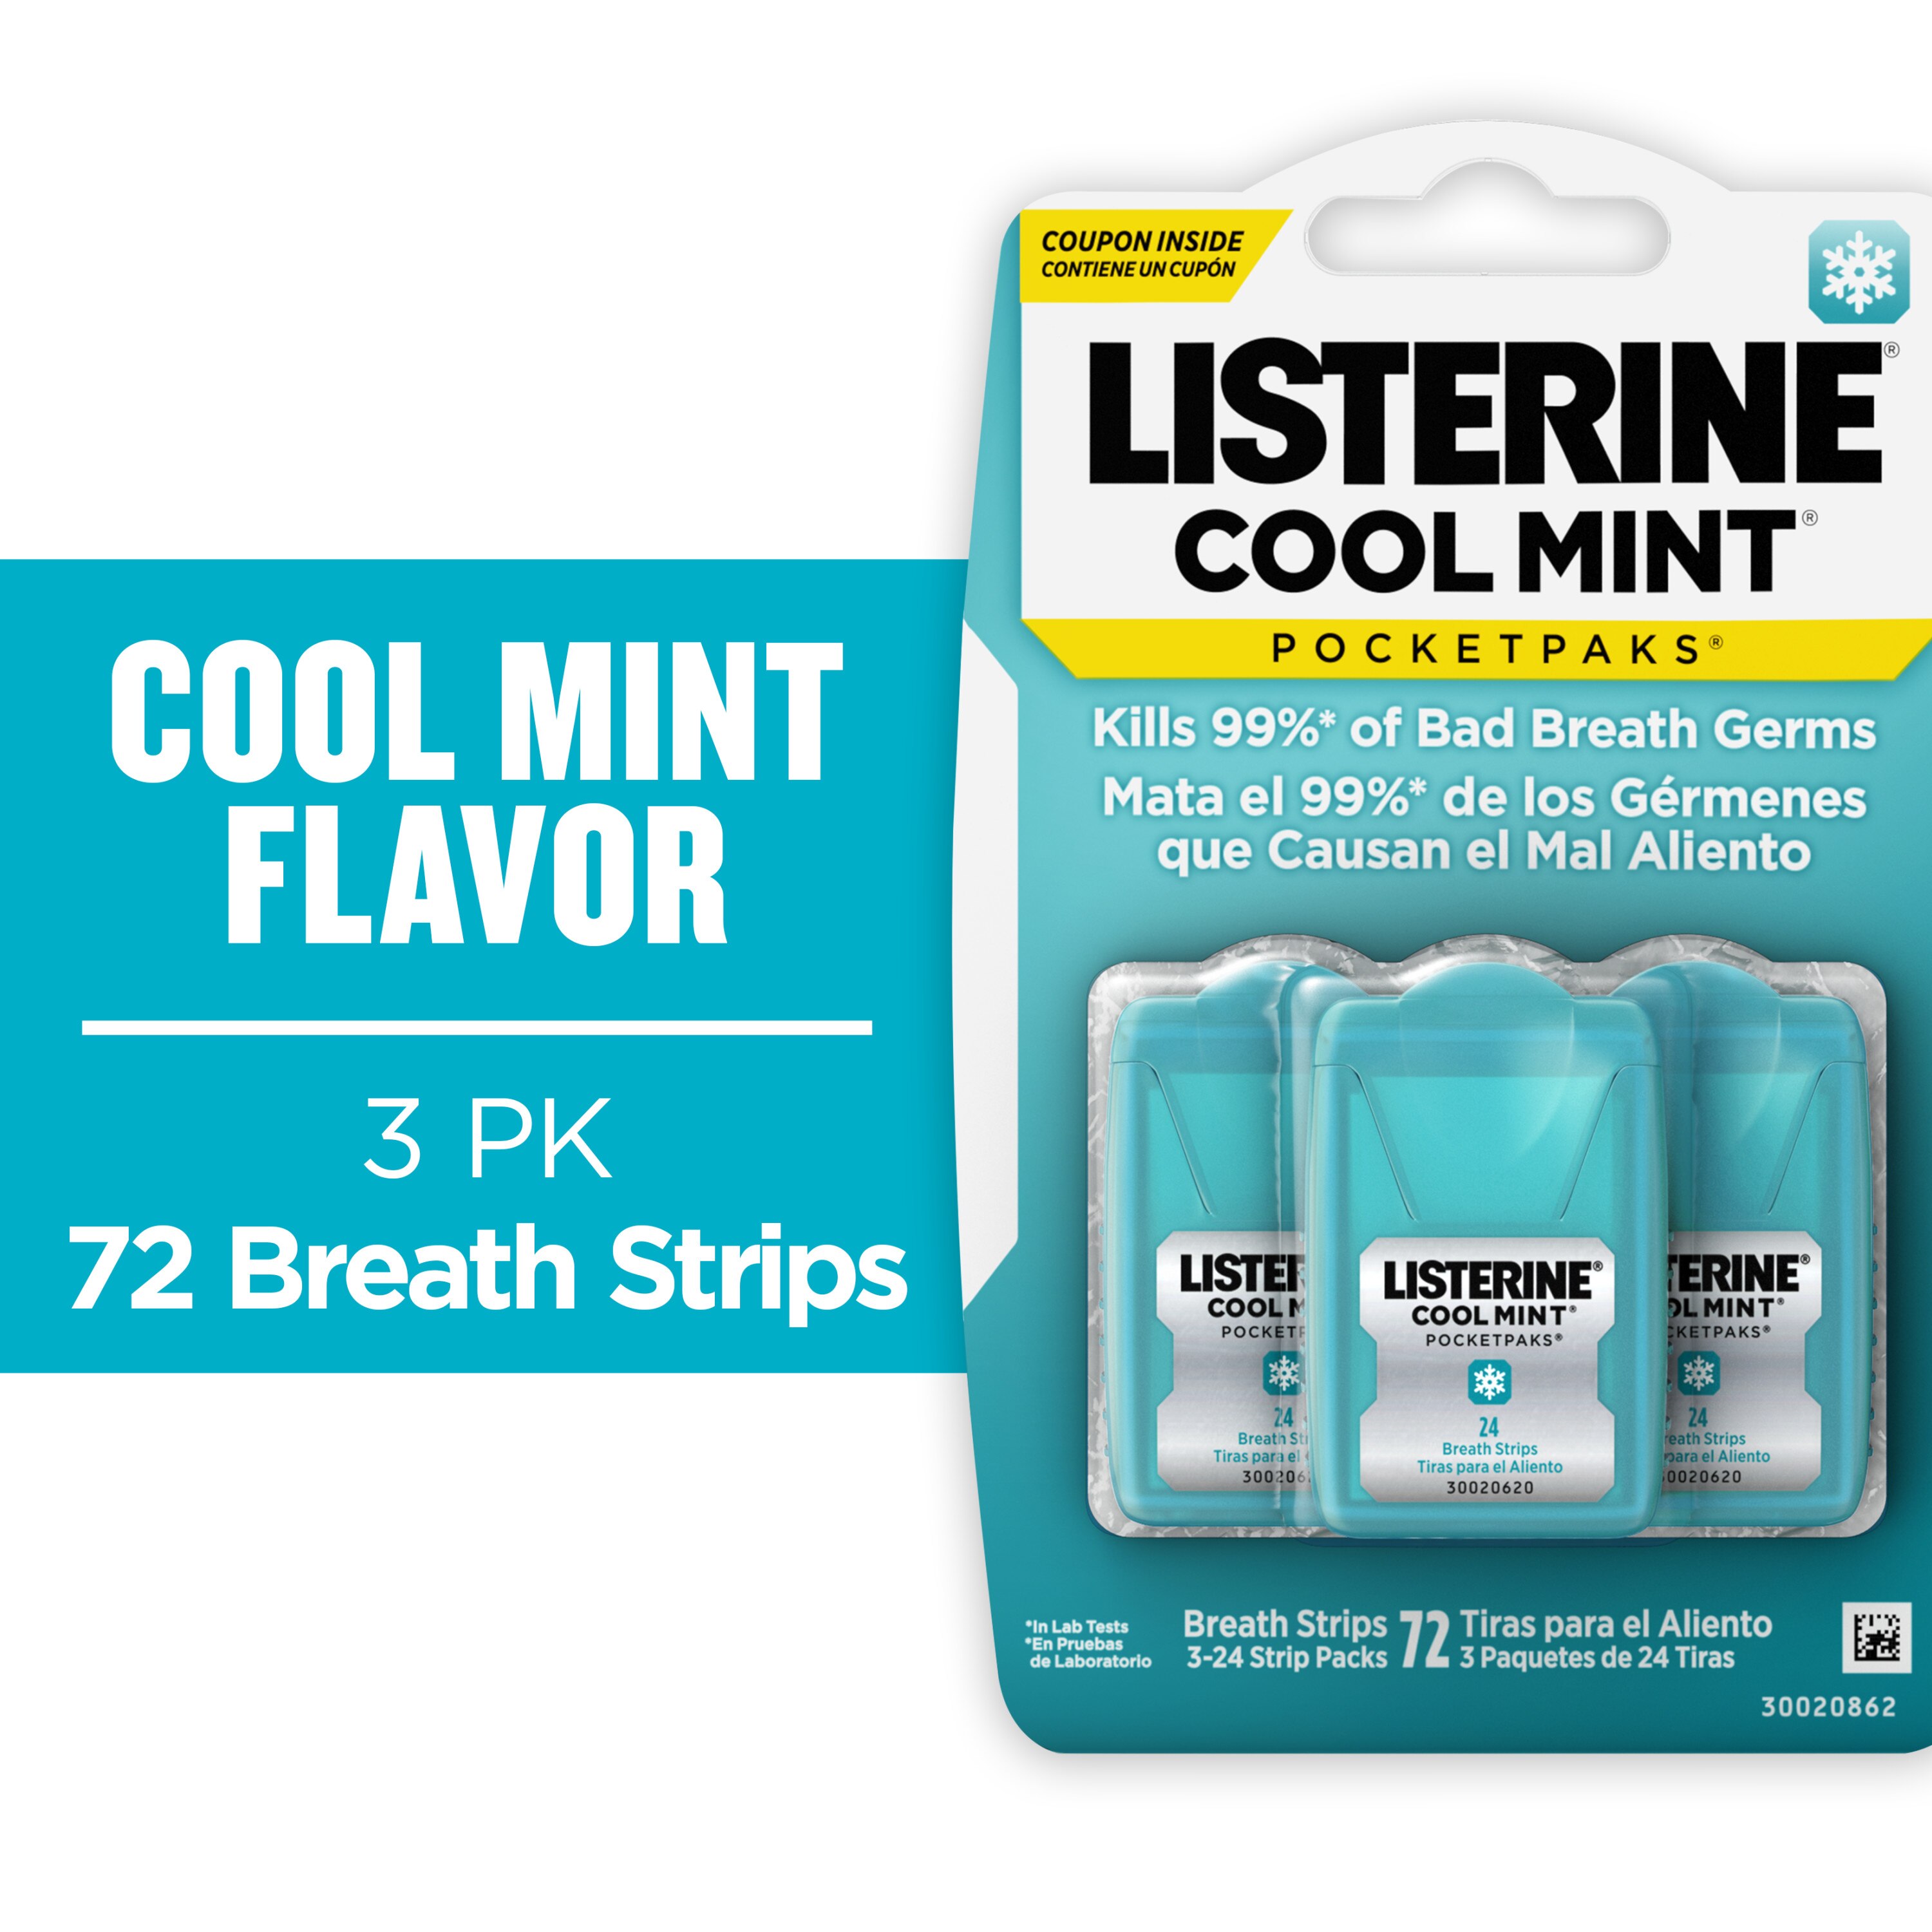 Listerine Cool Mint Pocketpaks - Tiras para el aliento, paquete de 24 tiras, paquete de 3